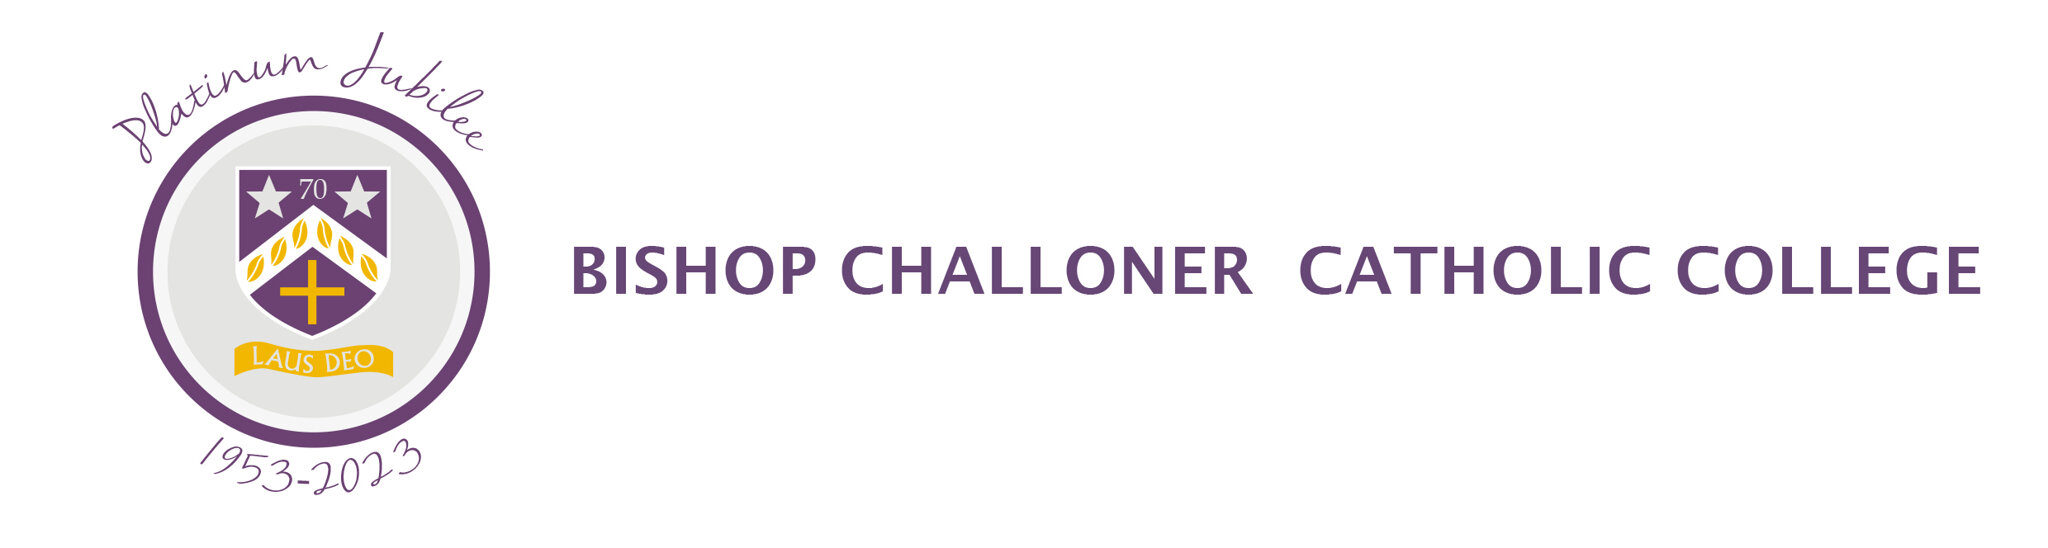 Online Safety | Bishop Challoner Catholic College